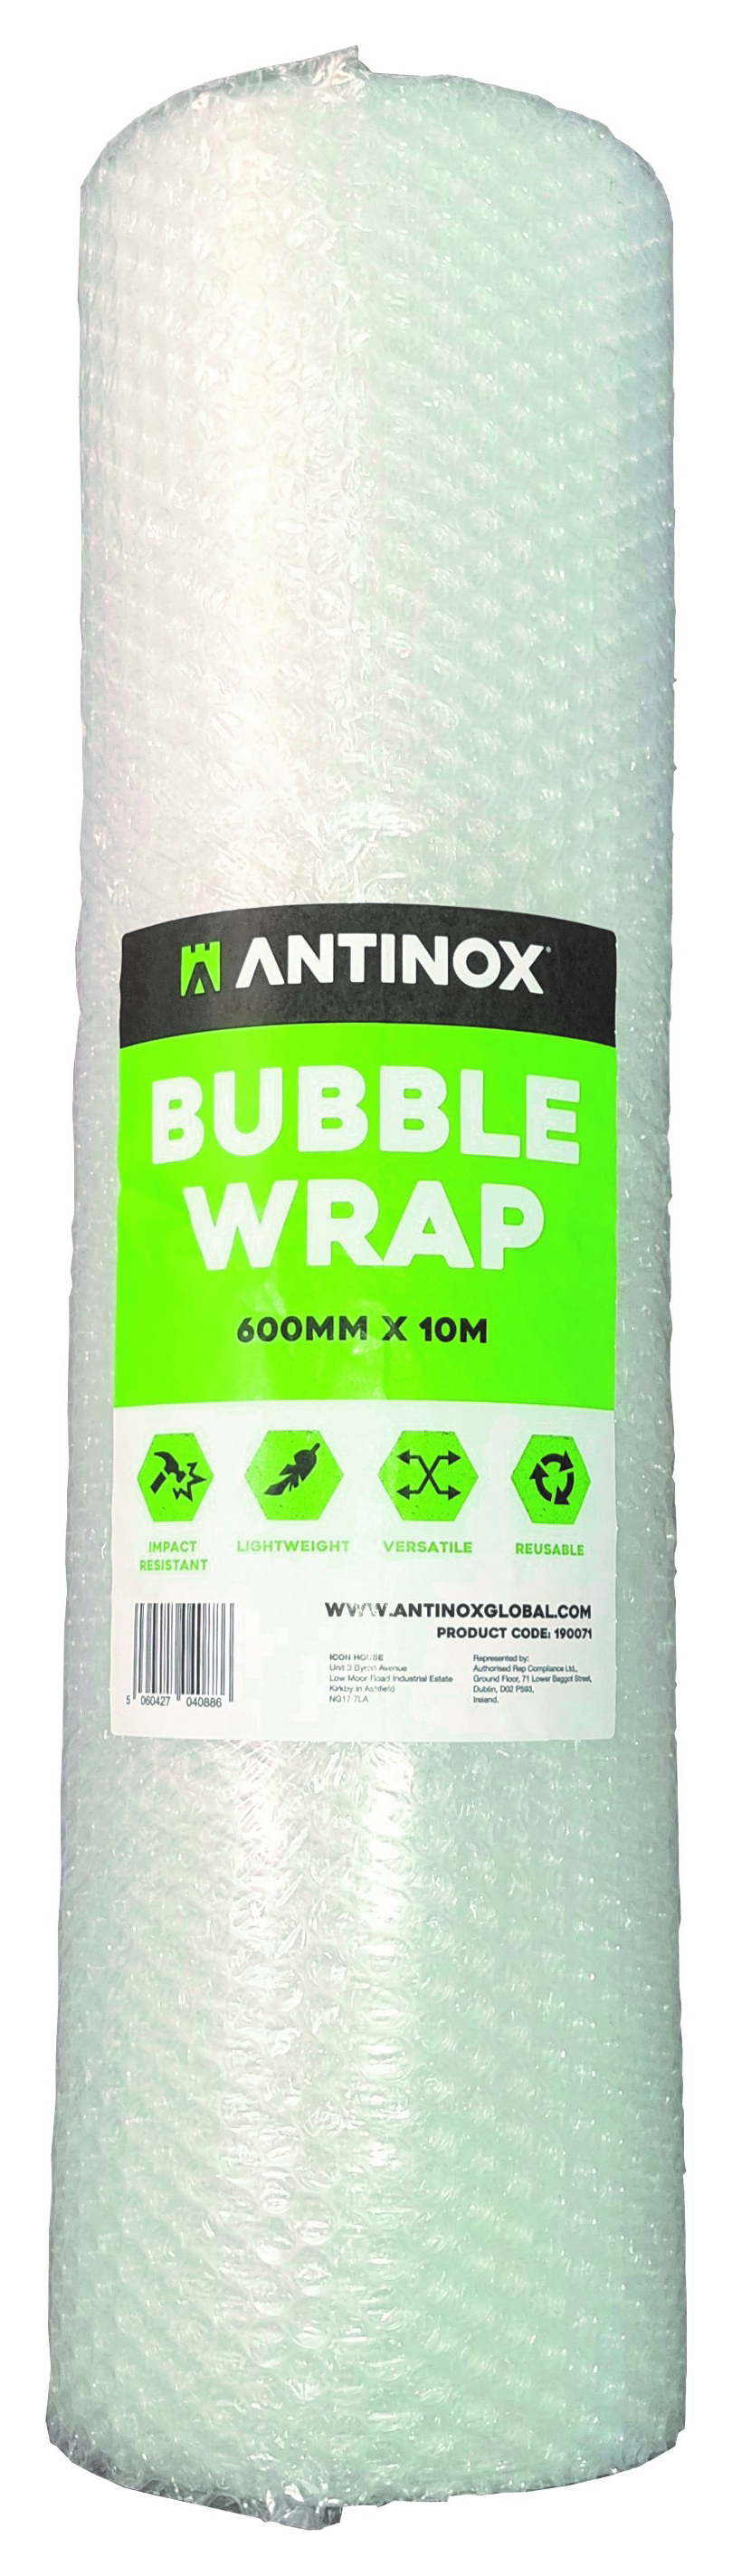 Image of Antinox Bubble Wrap - 600mm x 10m